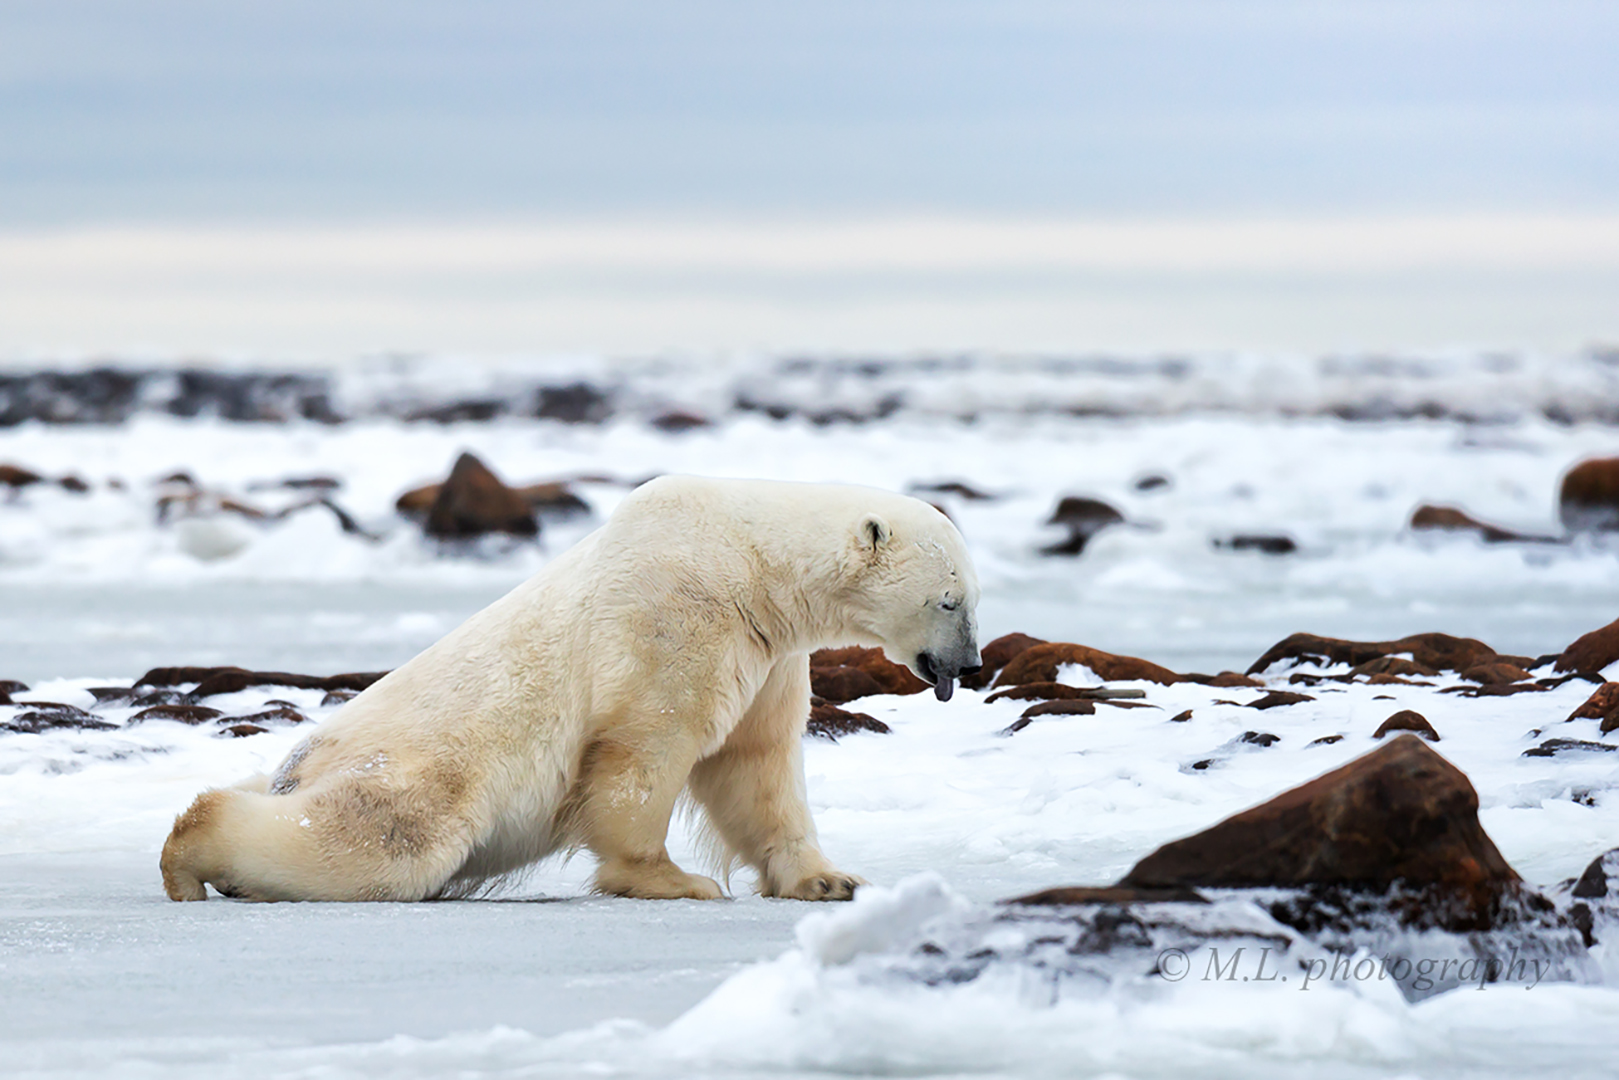 Polar bear at his early morning exercise